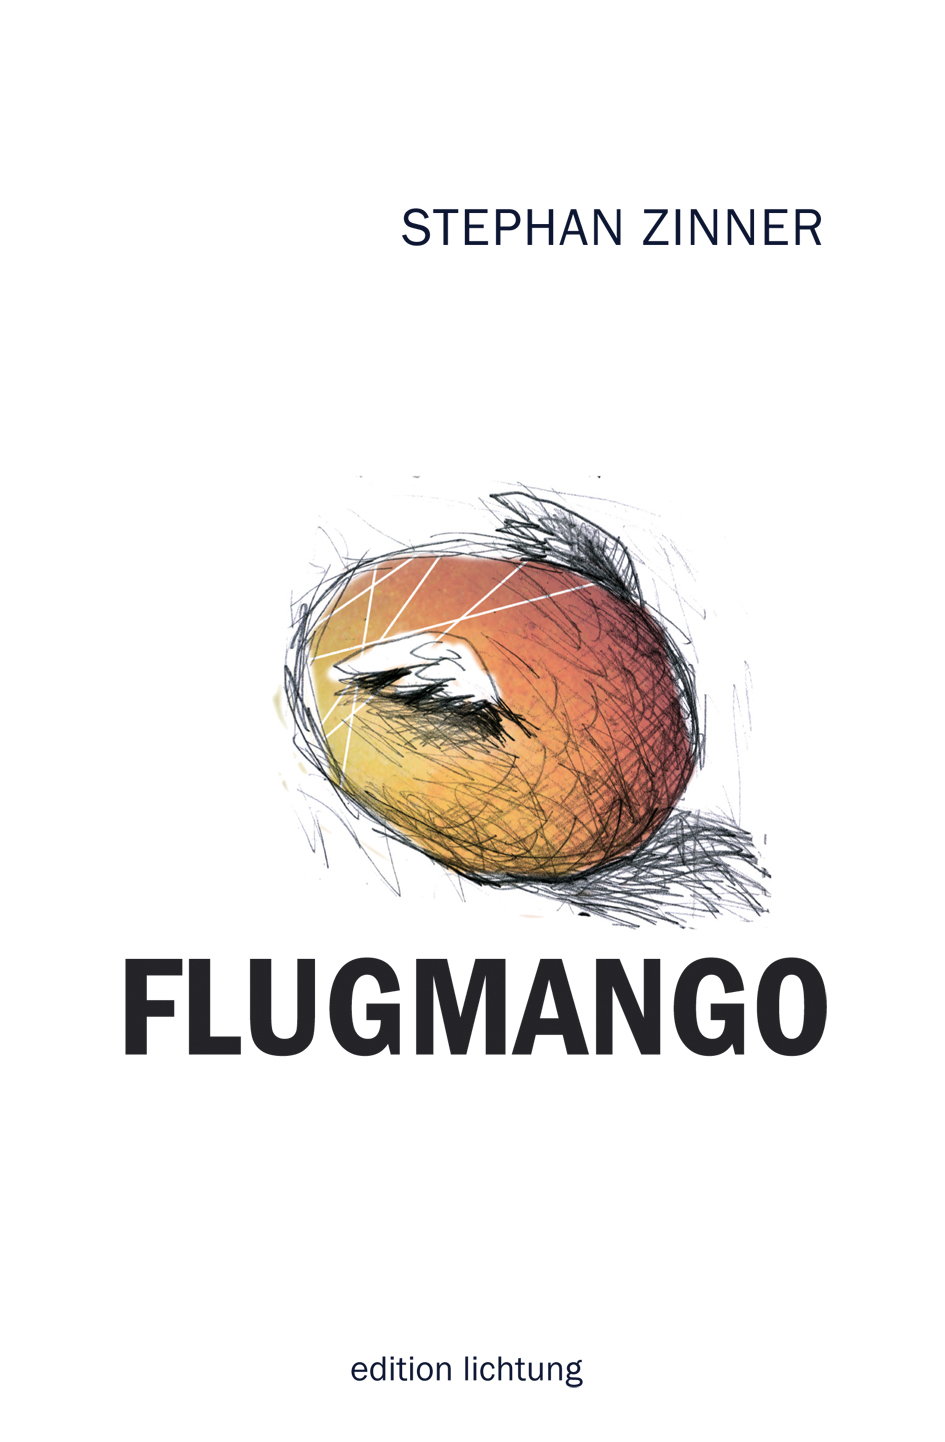 Flugmango